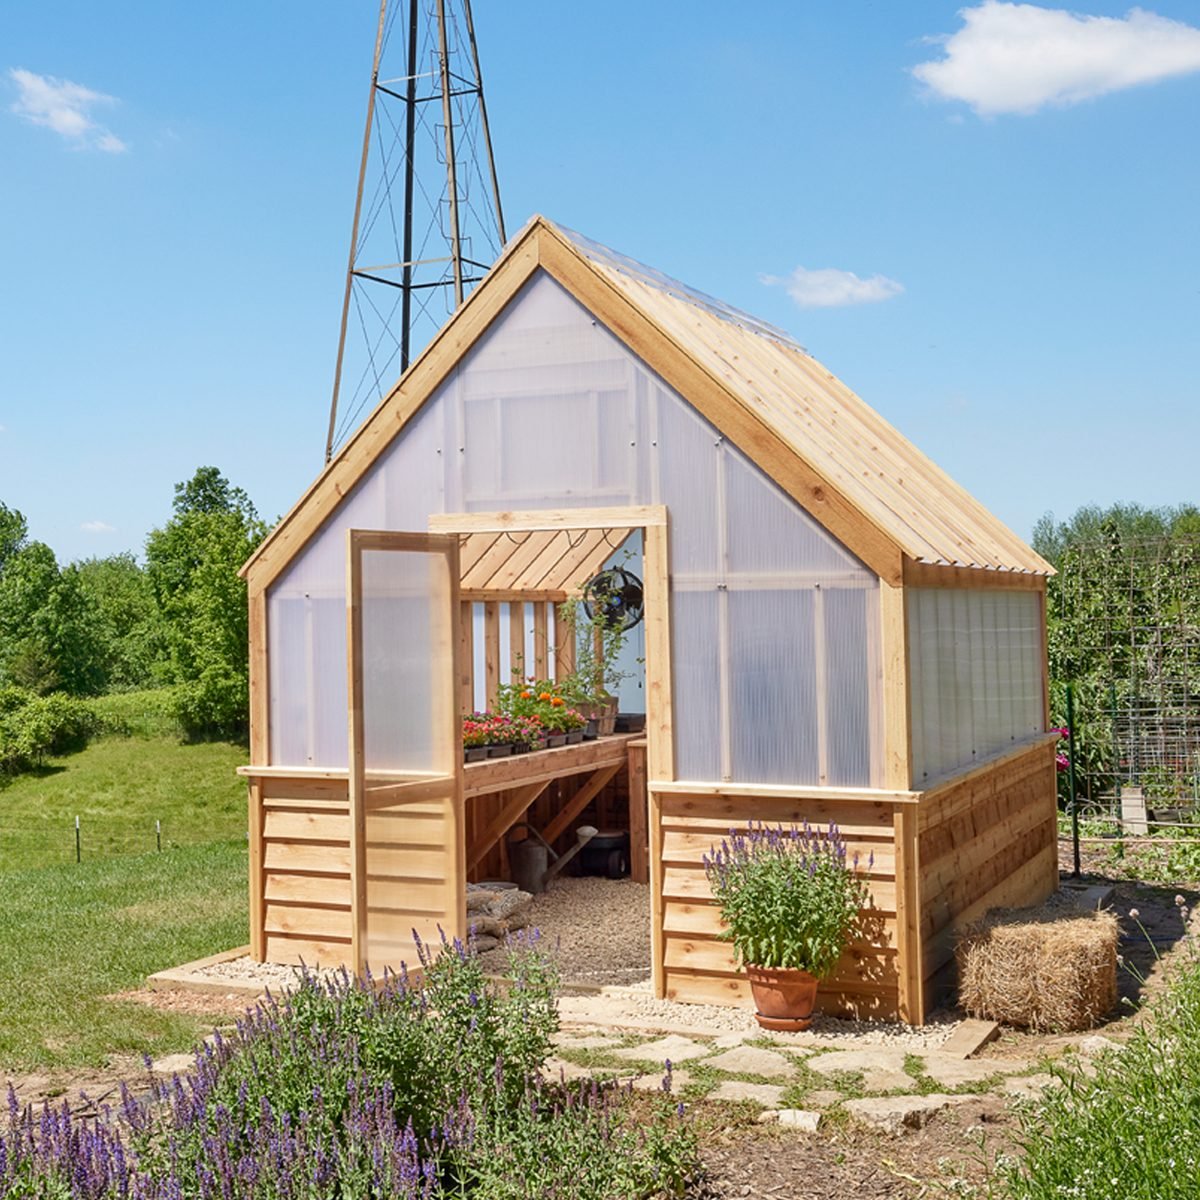 How to Build a Greenhouse (DIY) Family Handyman